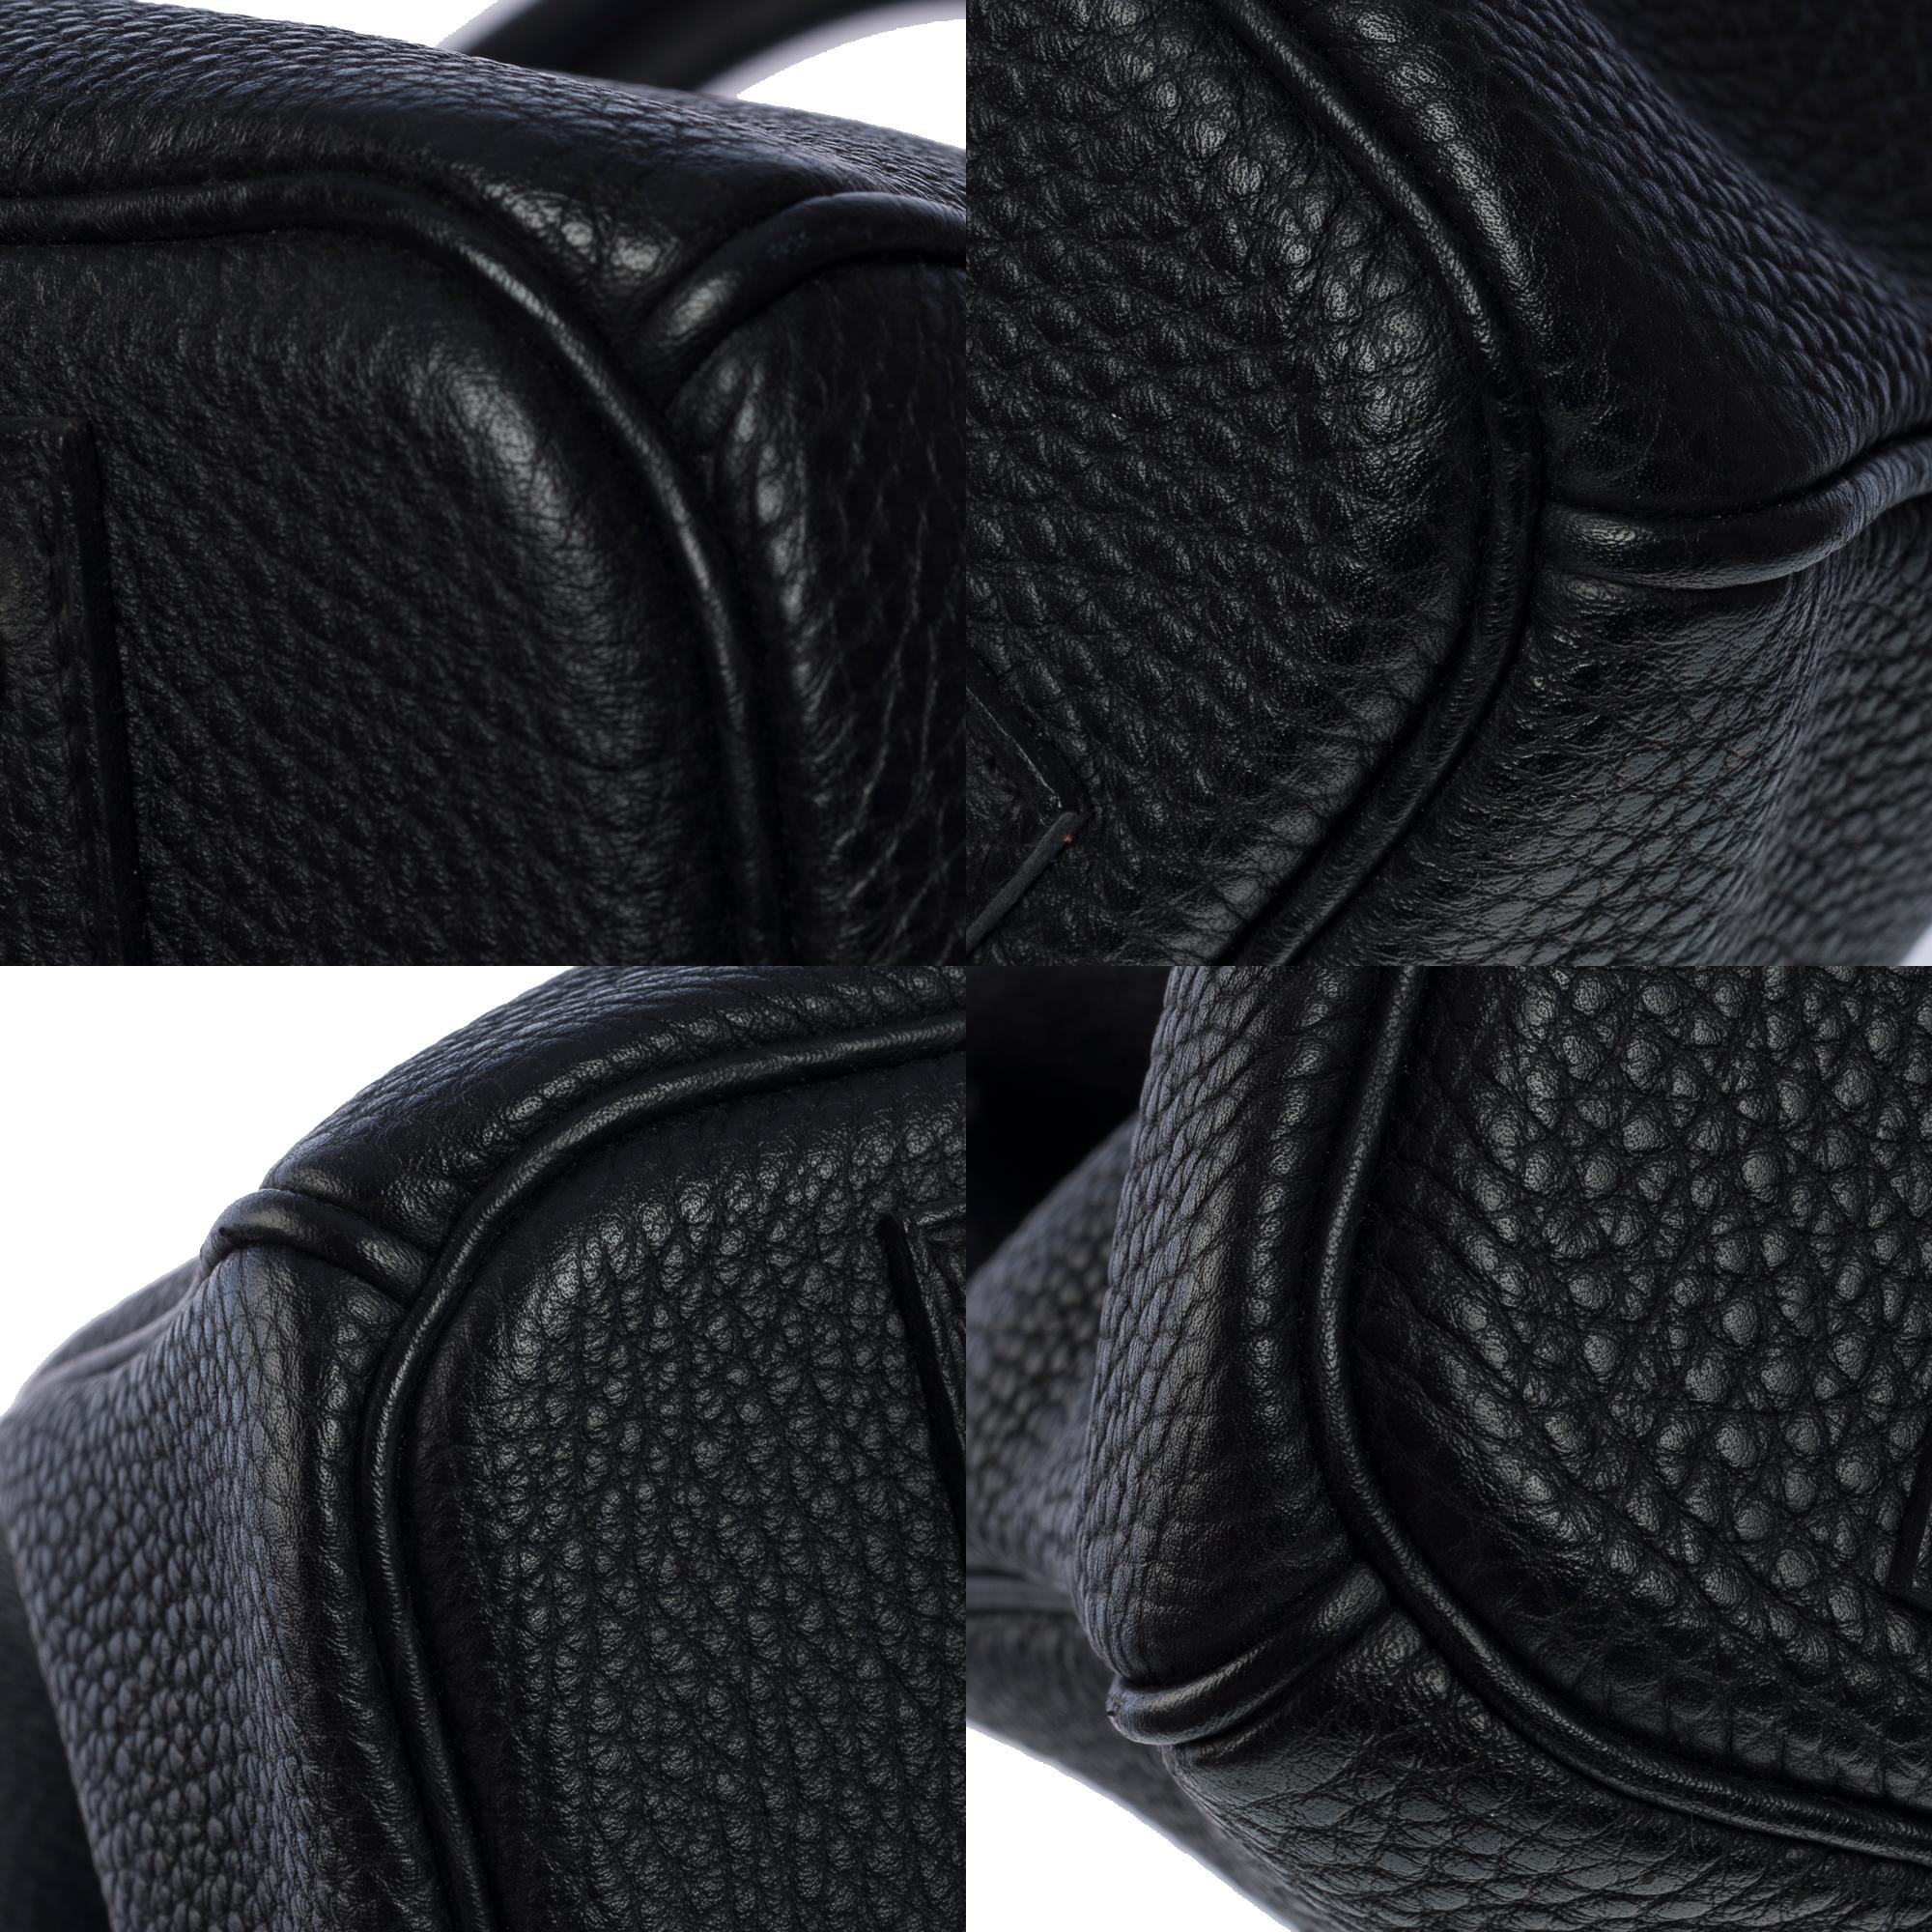 Stunning Hermes Birkin 40cm handbag in Black Togo leather, SHW 6